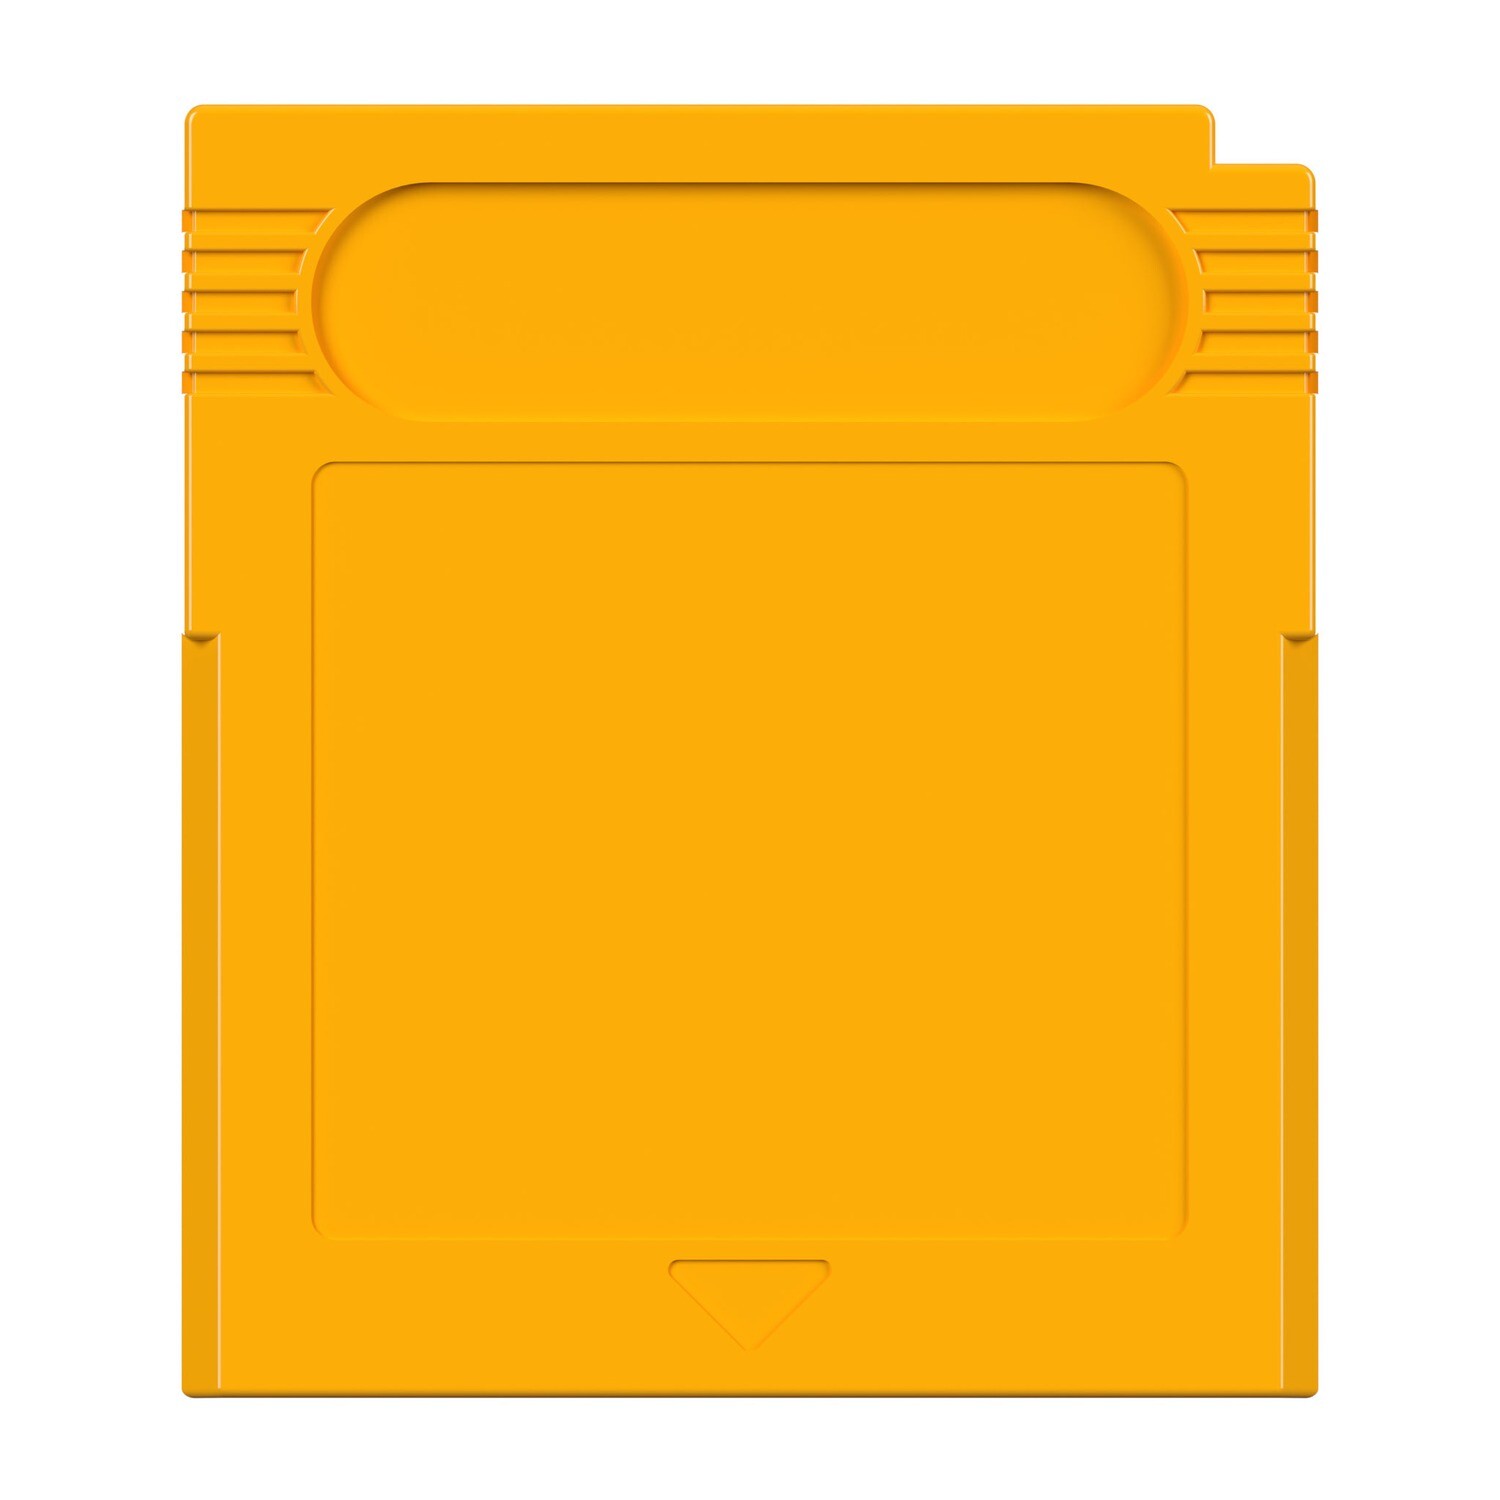 Game Boy Original Cartridge Shell (Yellow)